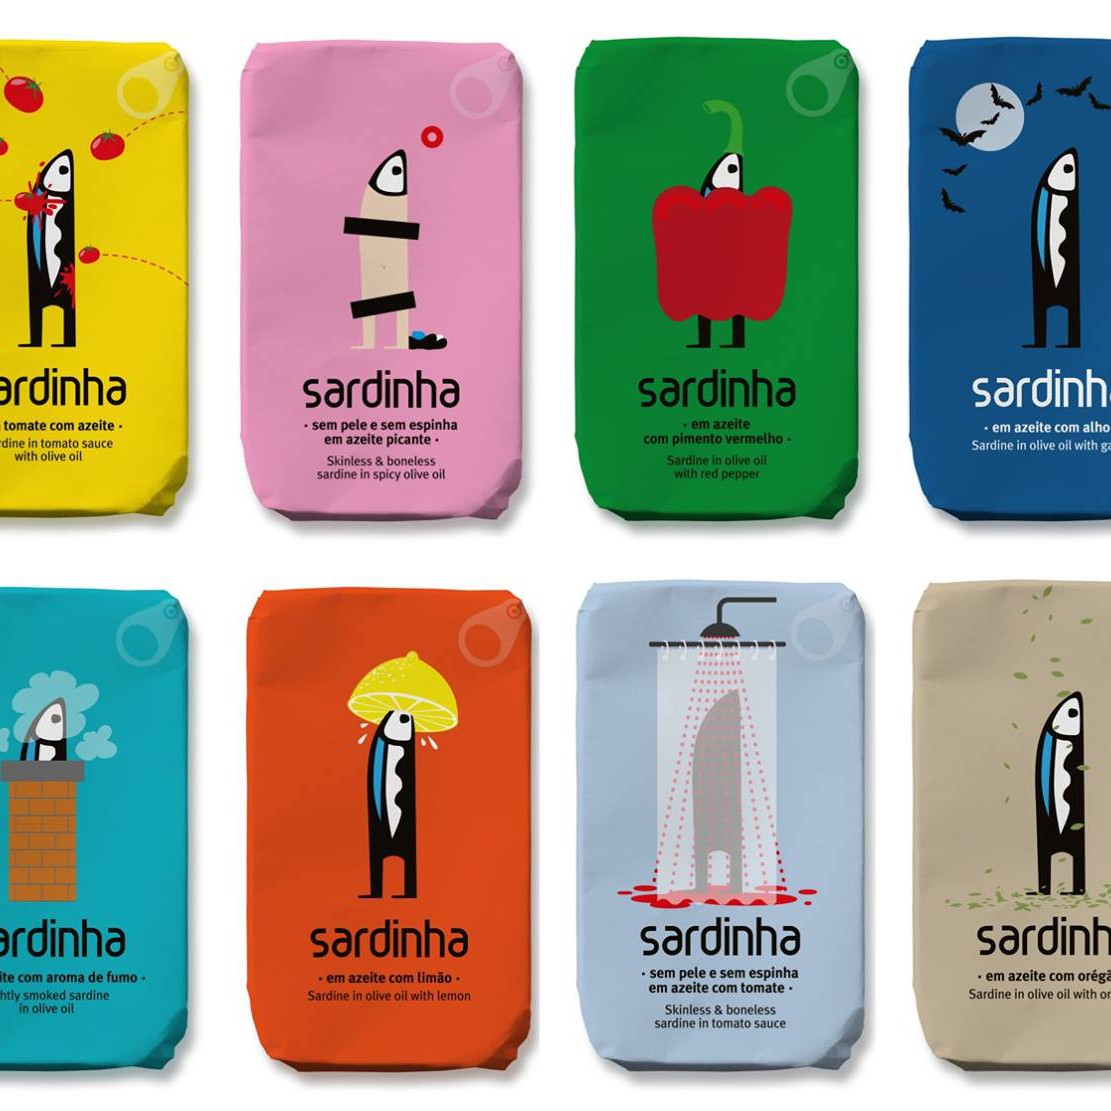 colourful tinned sardine packaging from Sardinha